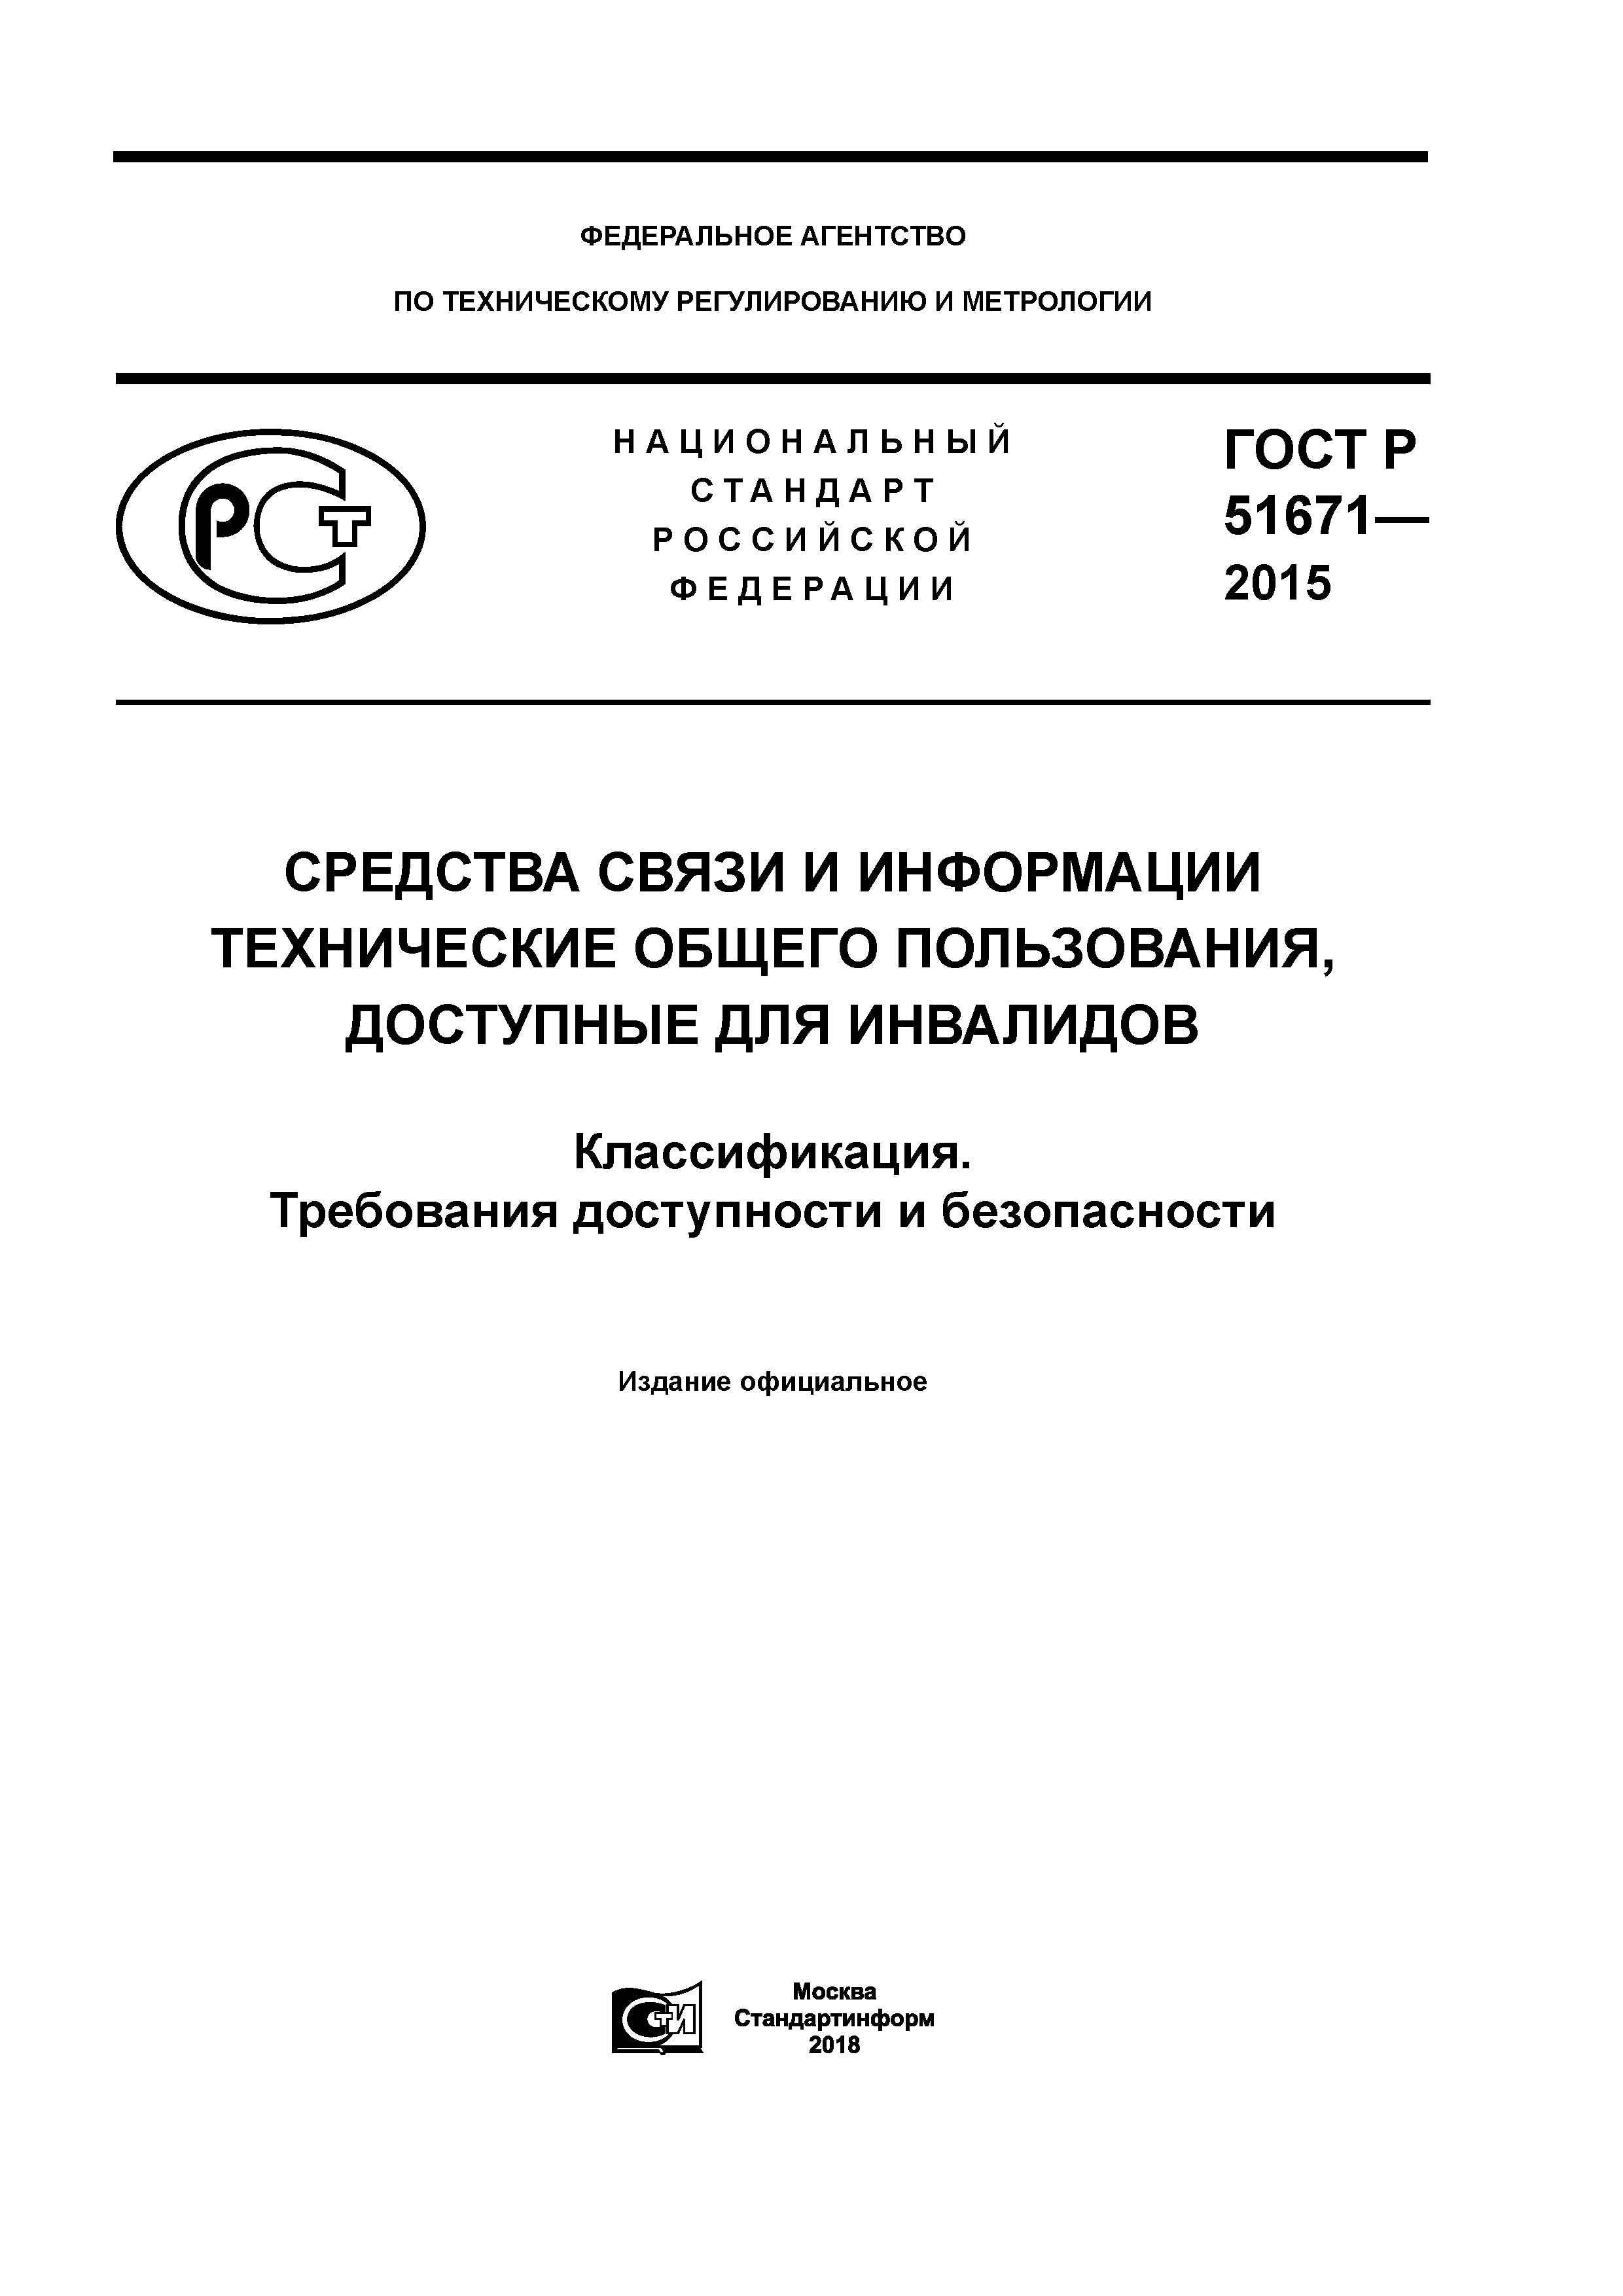 ГОСТ Р 51671-2015